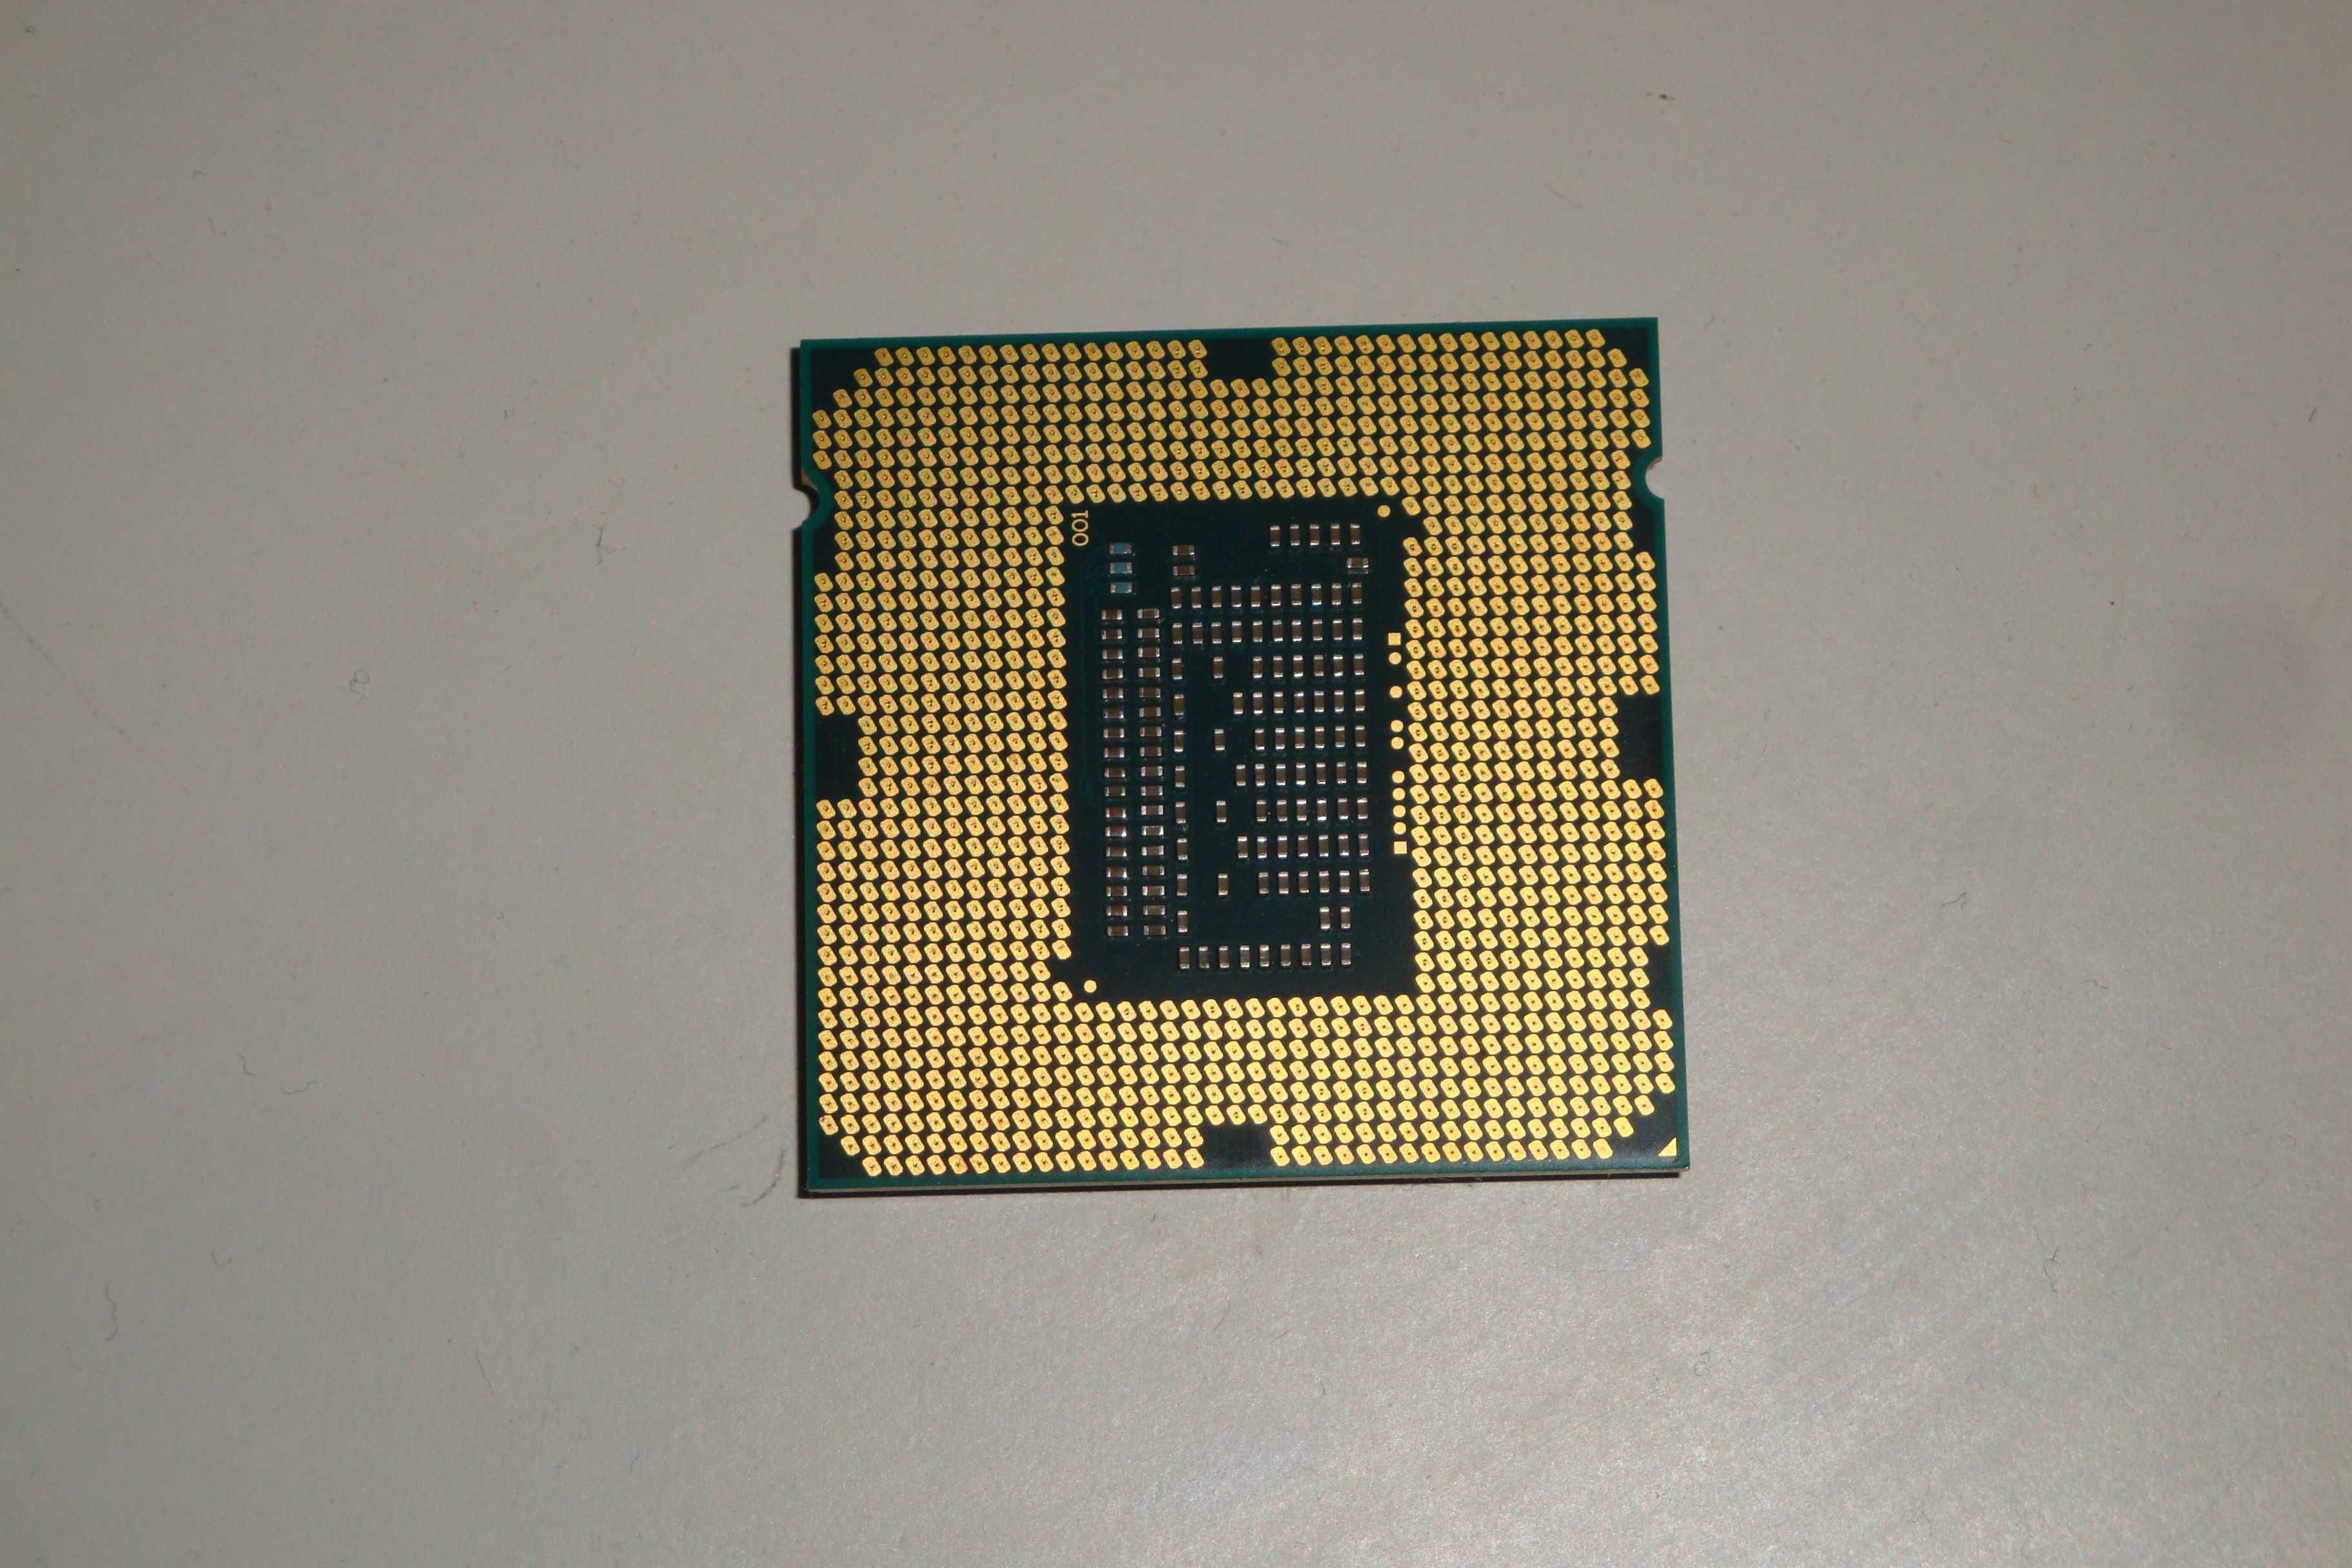 Procesor intel i5 3570 3.8ghz socket 1155 6mb cache